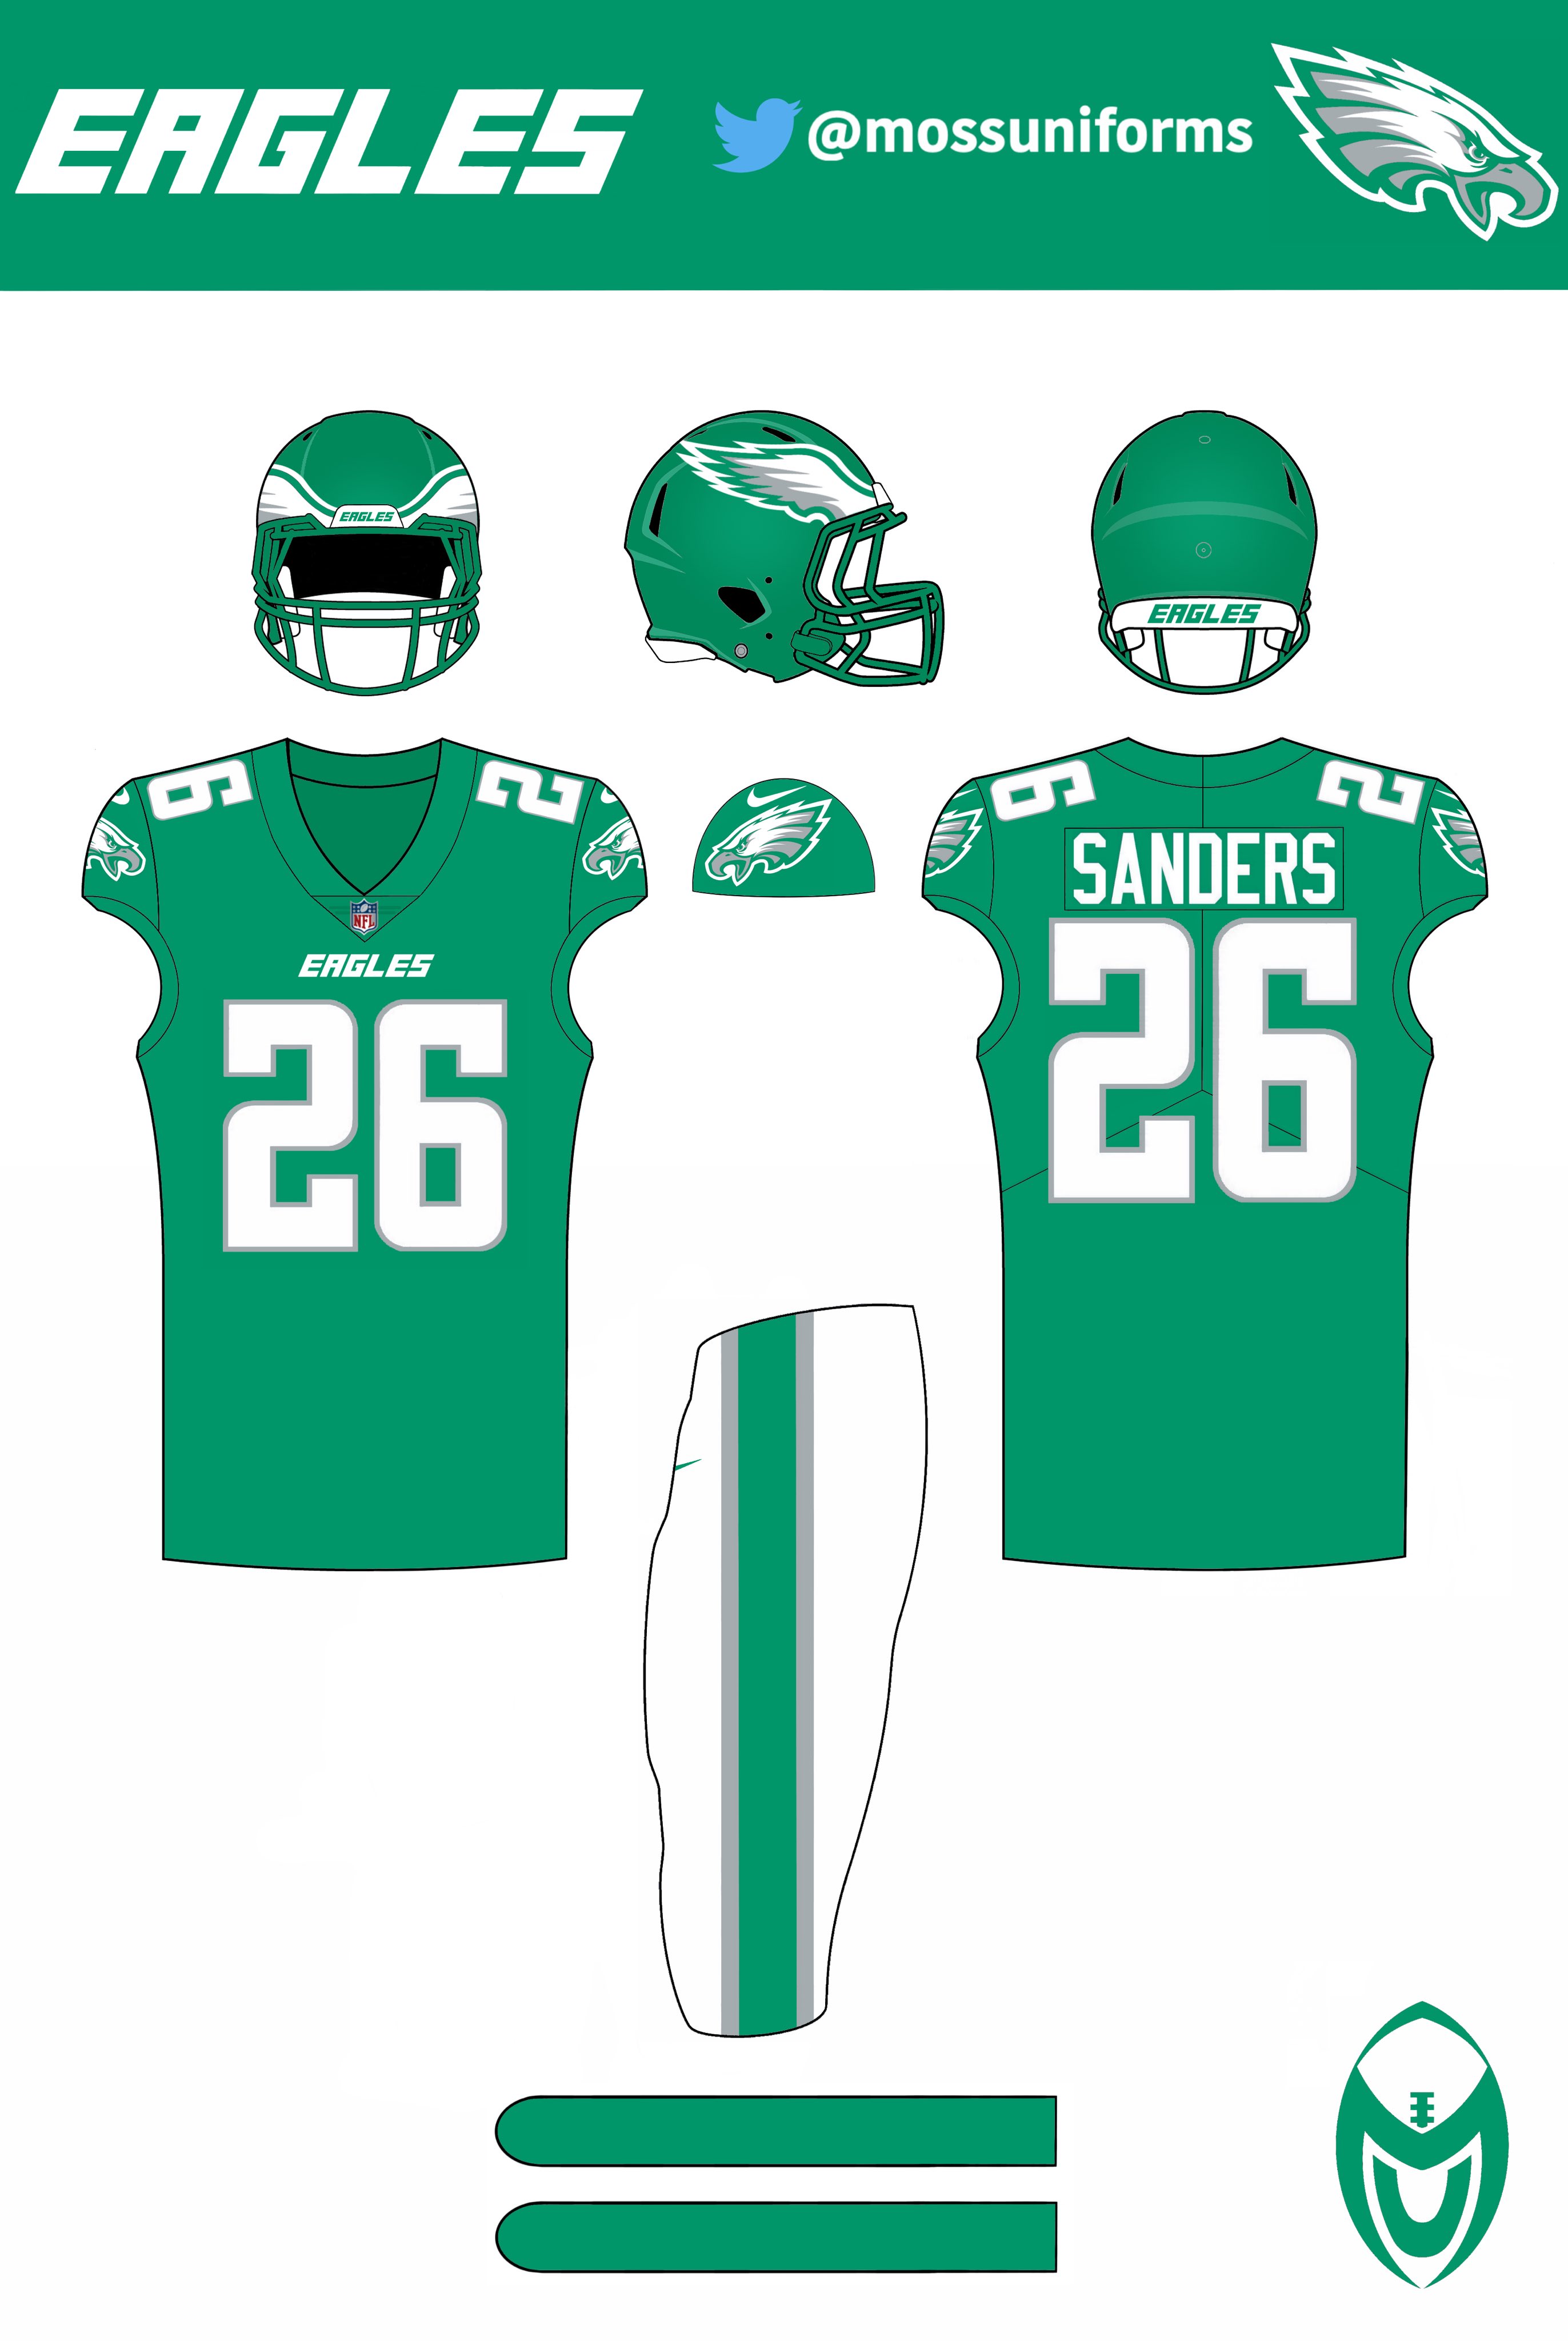 Philadelphia Eagles Concept Uniforms